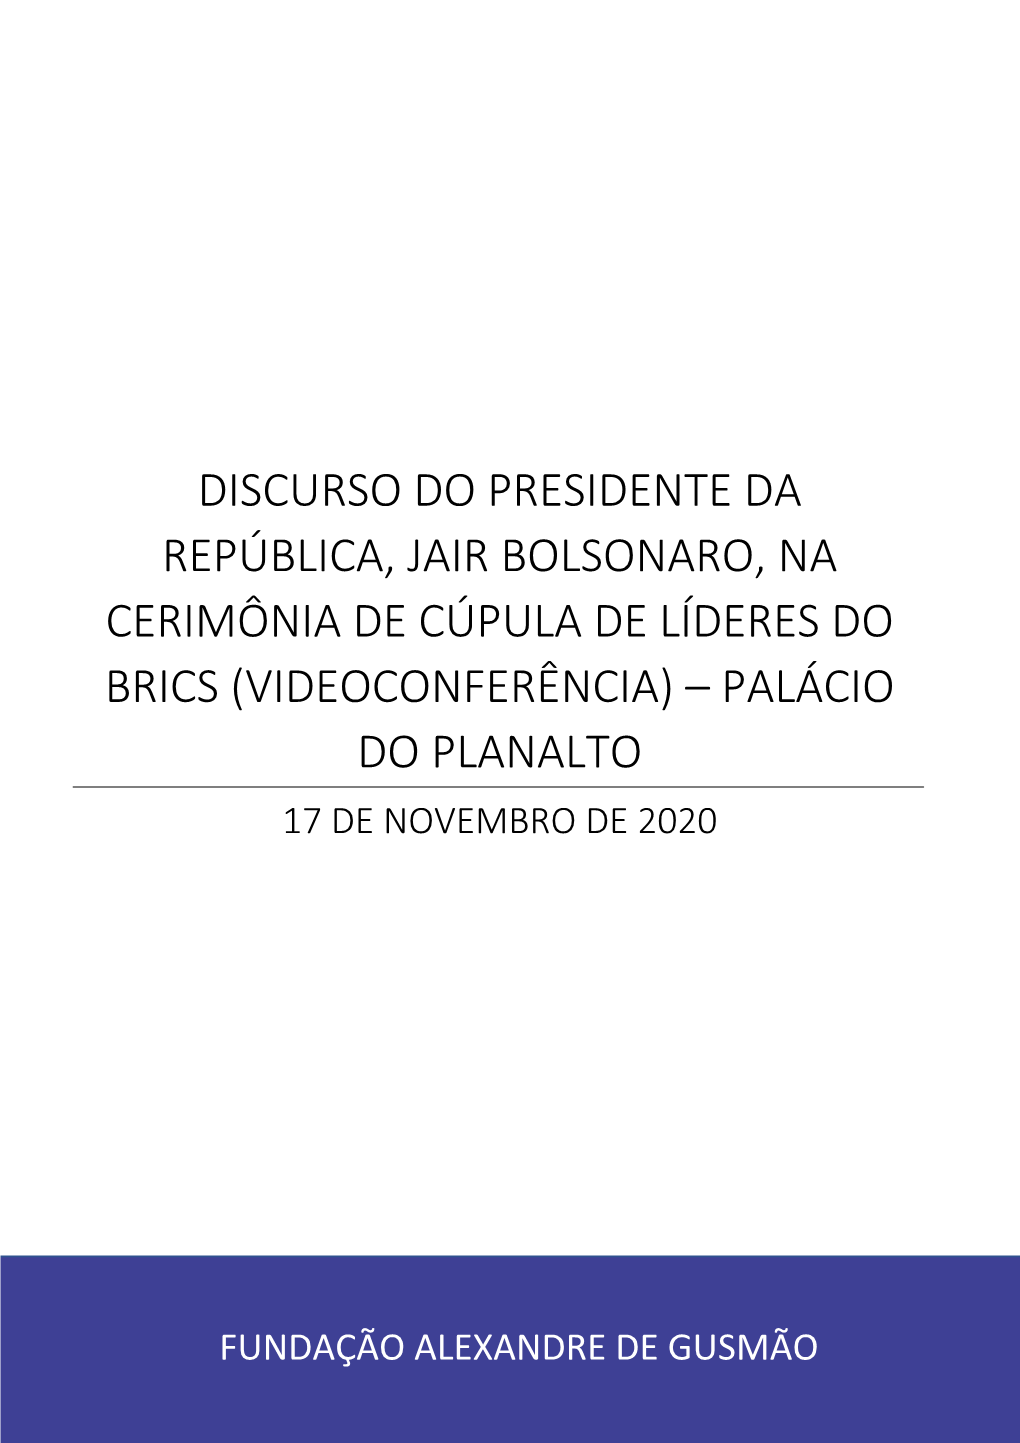 Discurso Do Presidente Da República, Jair Bolsonaro, Na Cerimônia De Cúpula De Líderes Do Brics (Videoconferência) – Palácio Do Planalto 17 De Novembro De 2020